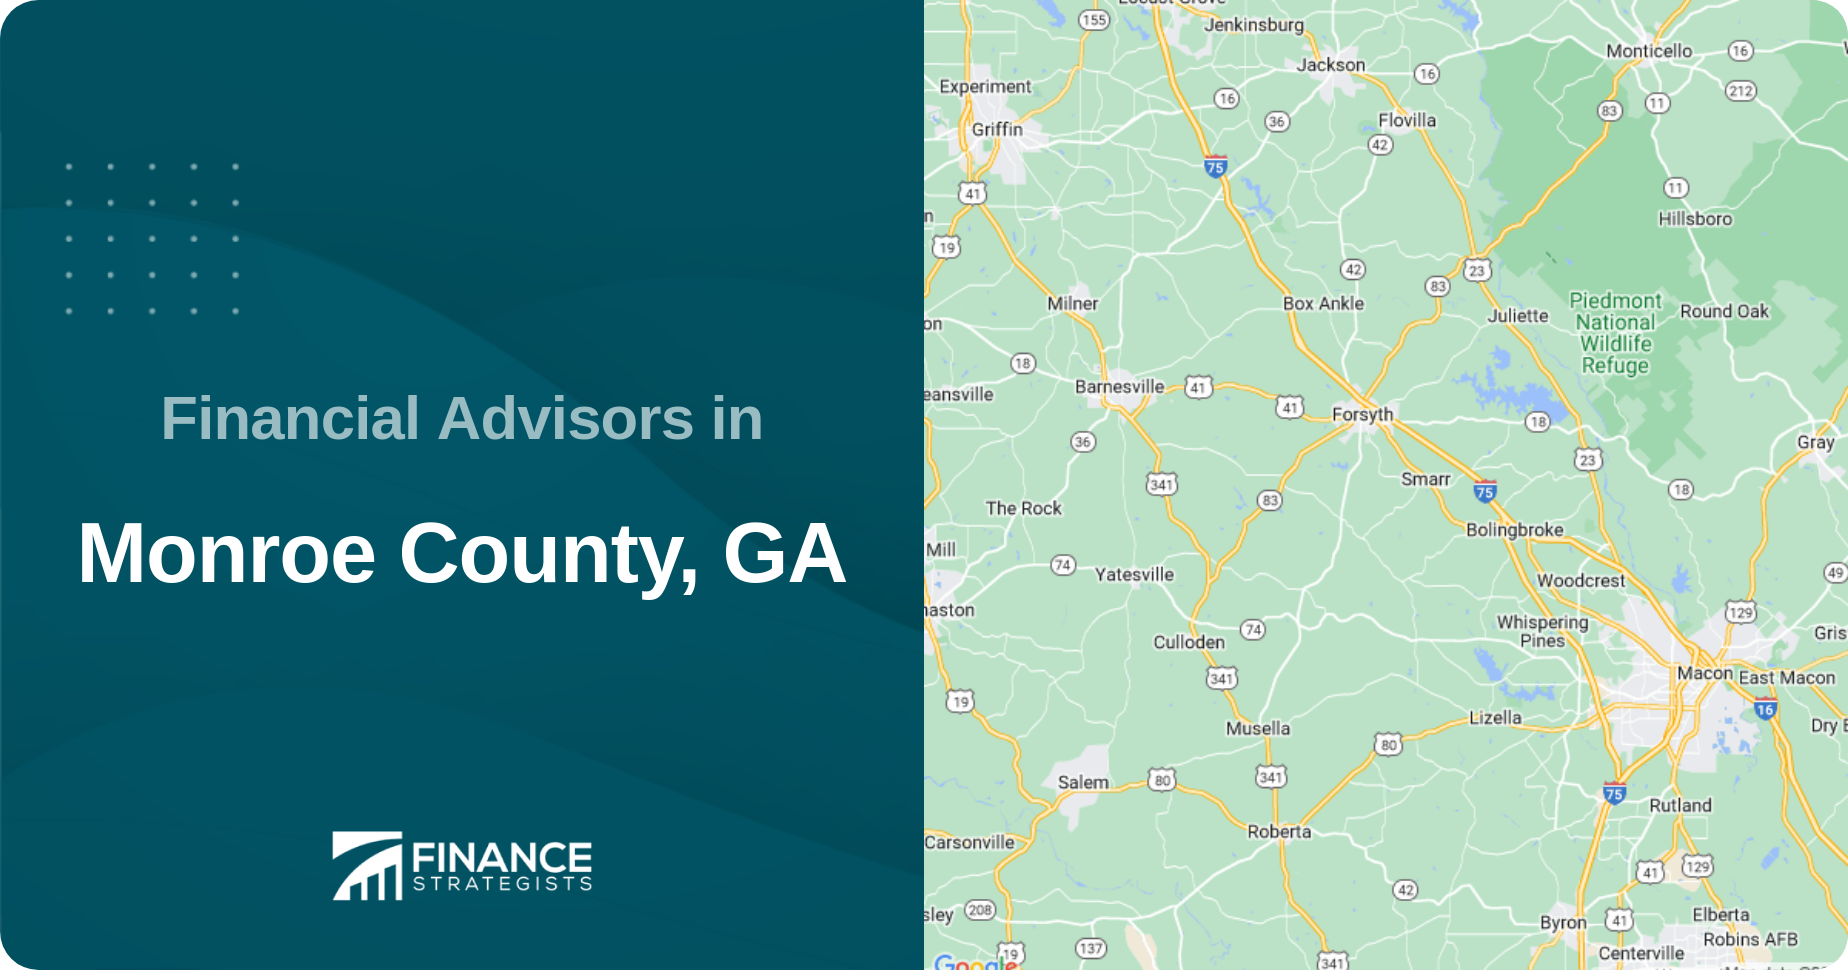 Financial Advisors in Monroe County, GA